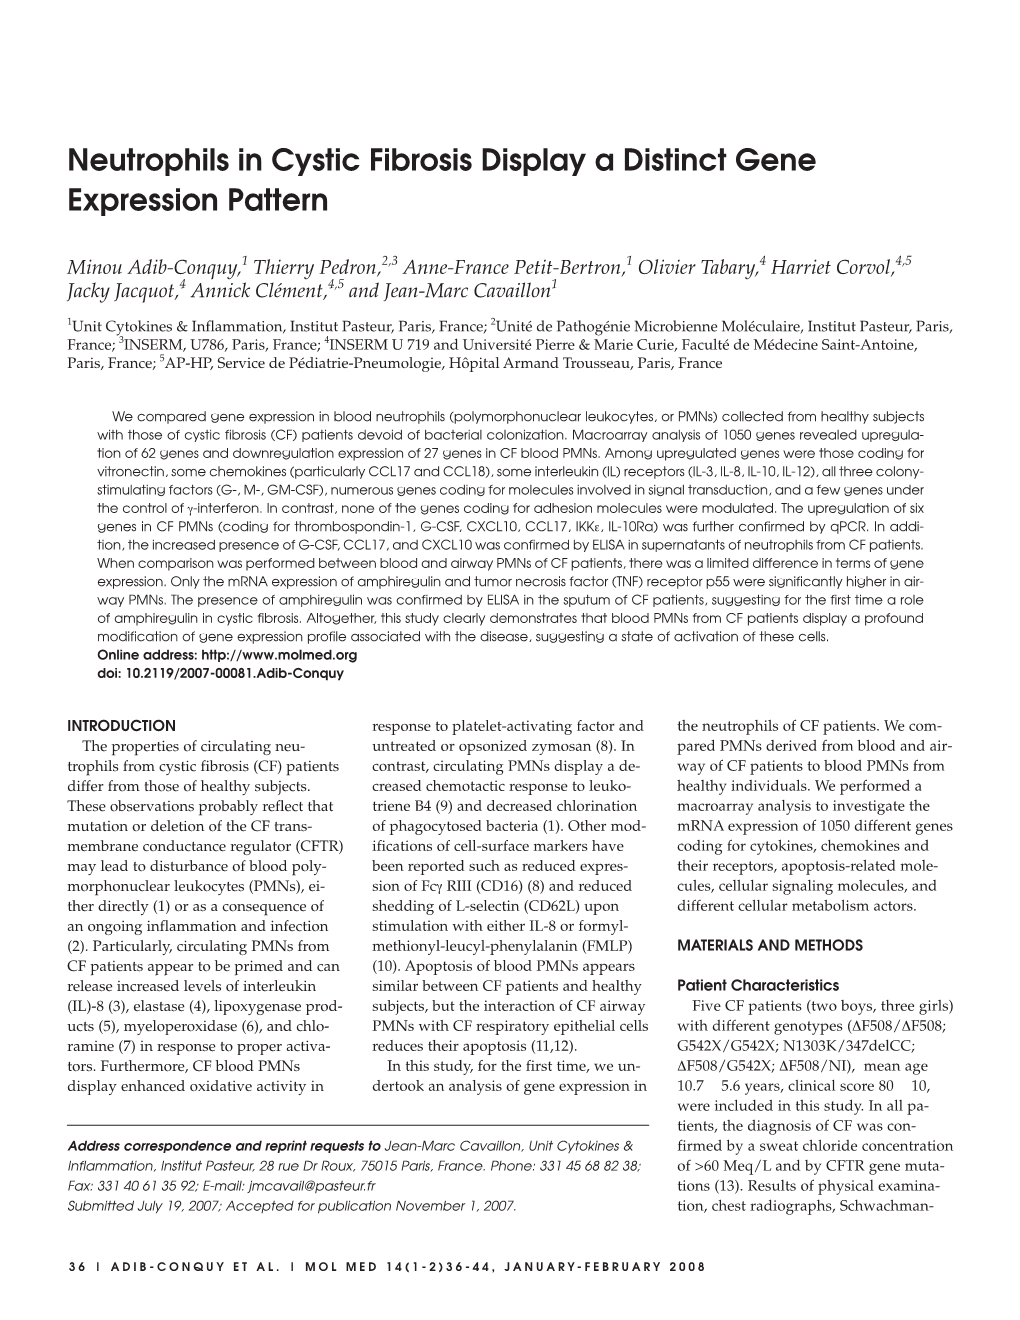 Neutrophils in Cystic Fibrosis Display a Distinct Gene Expression Pattern